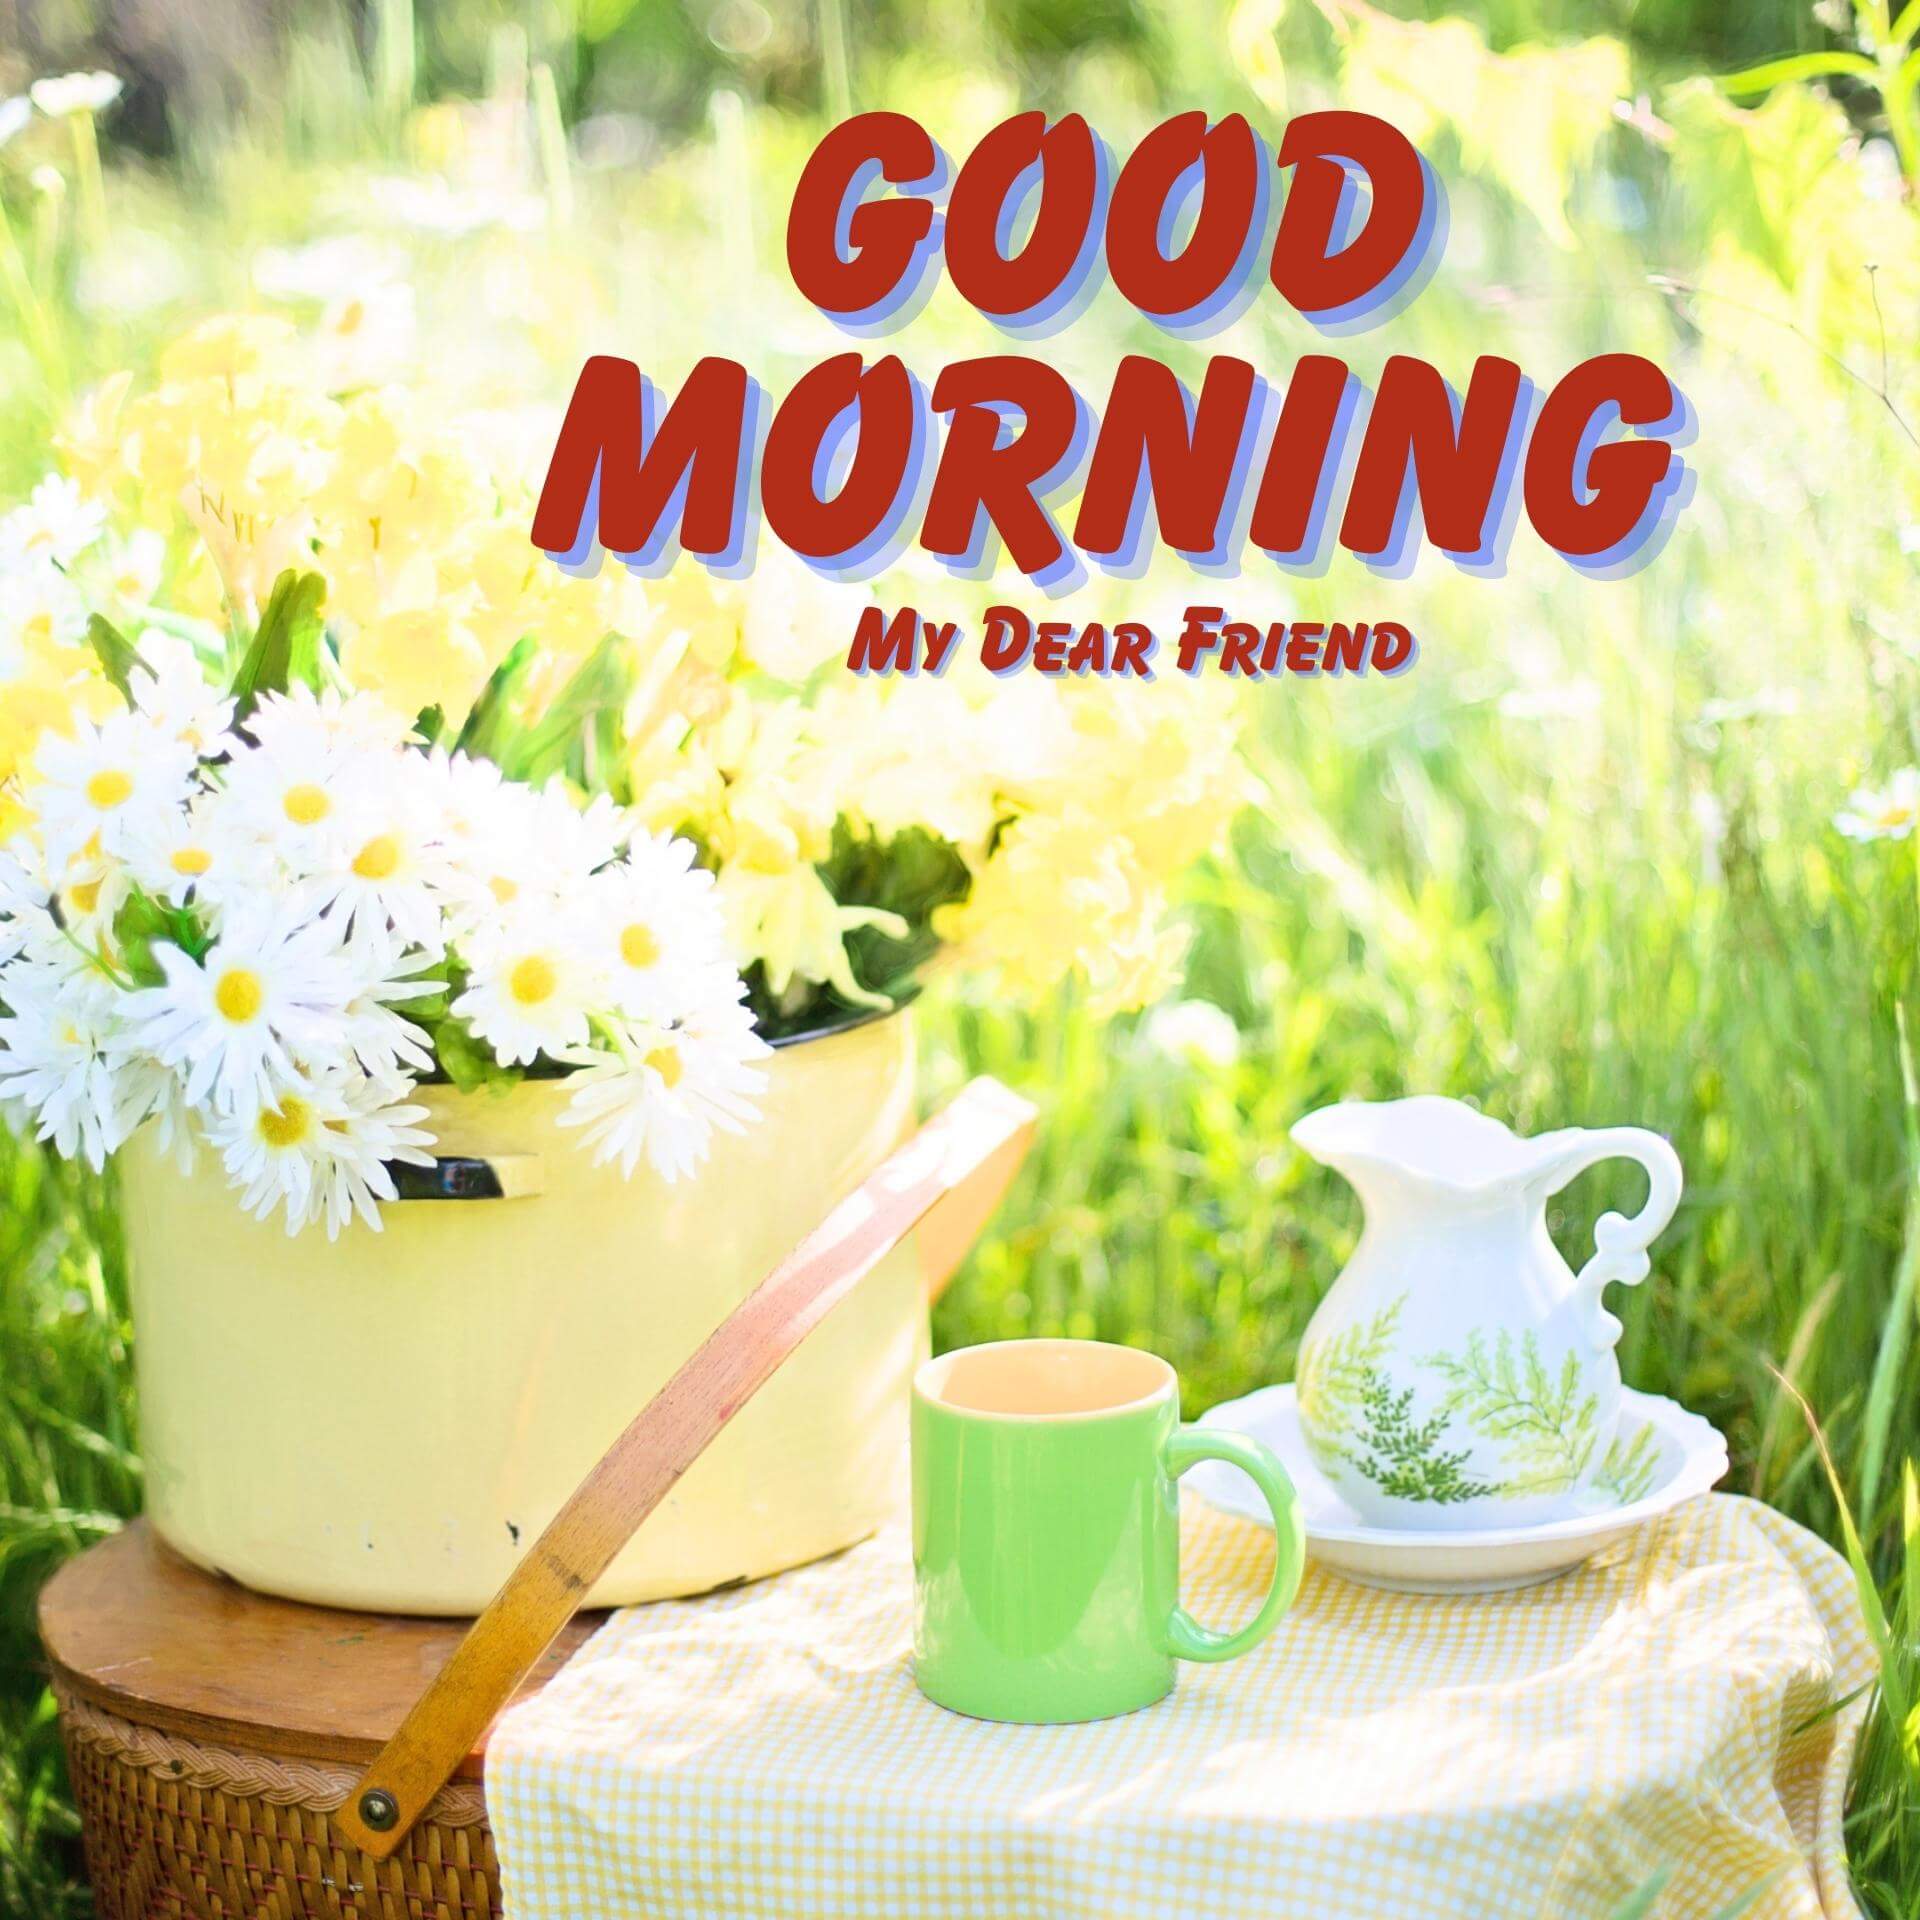 Fresh Good Morning Images Wallpaper for Facebook